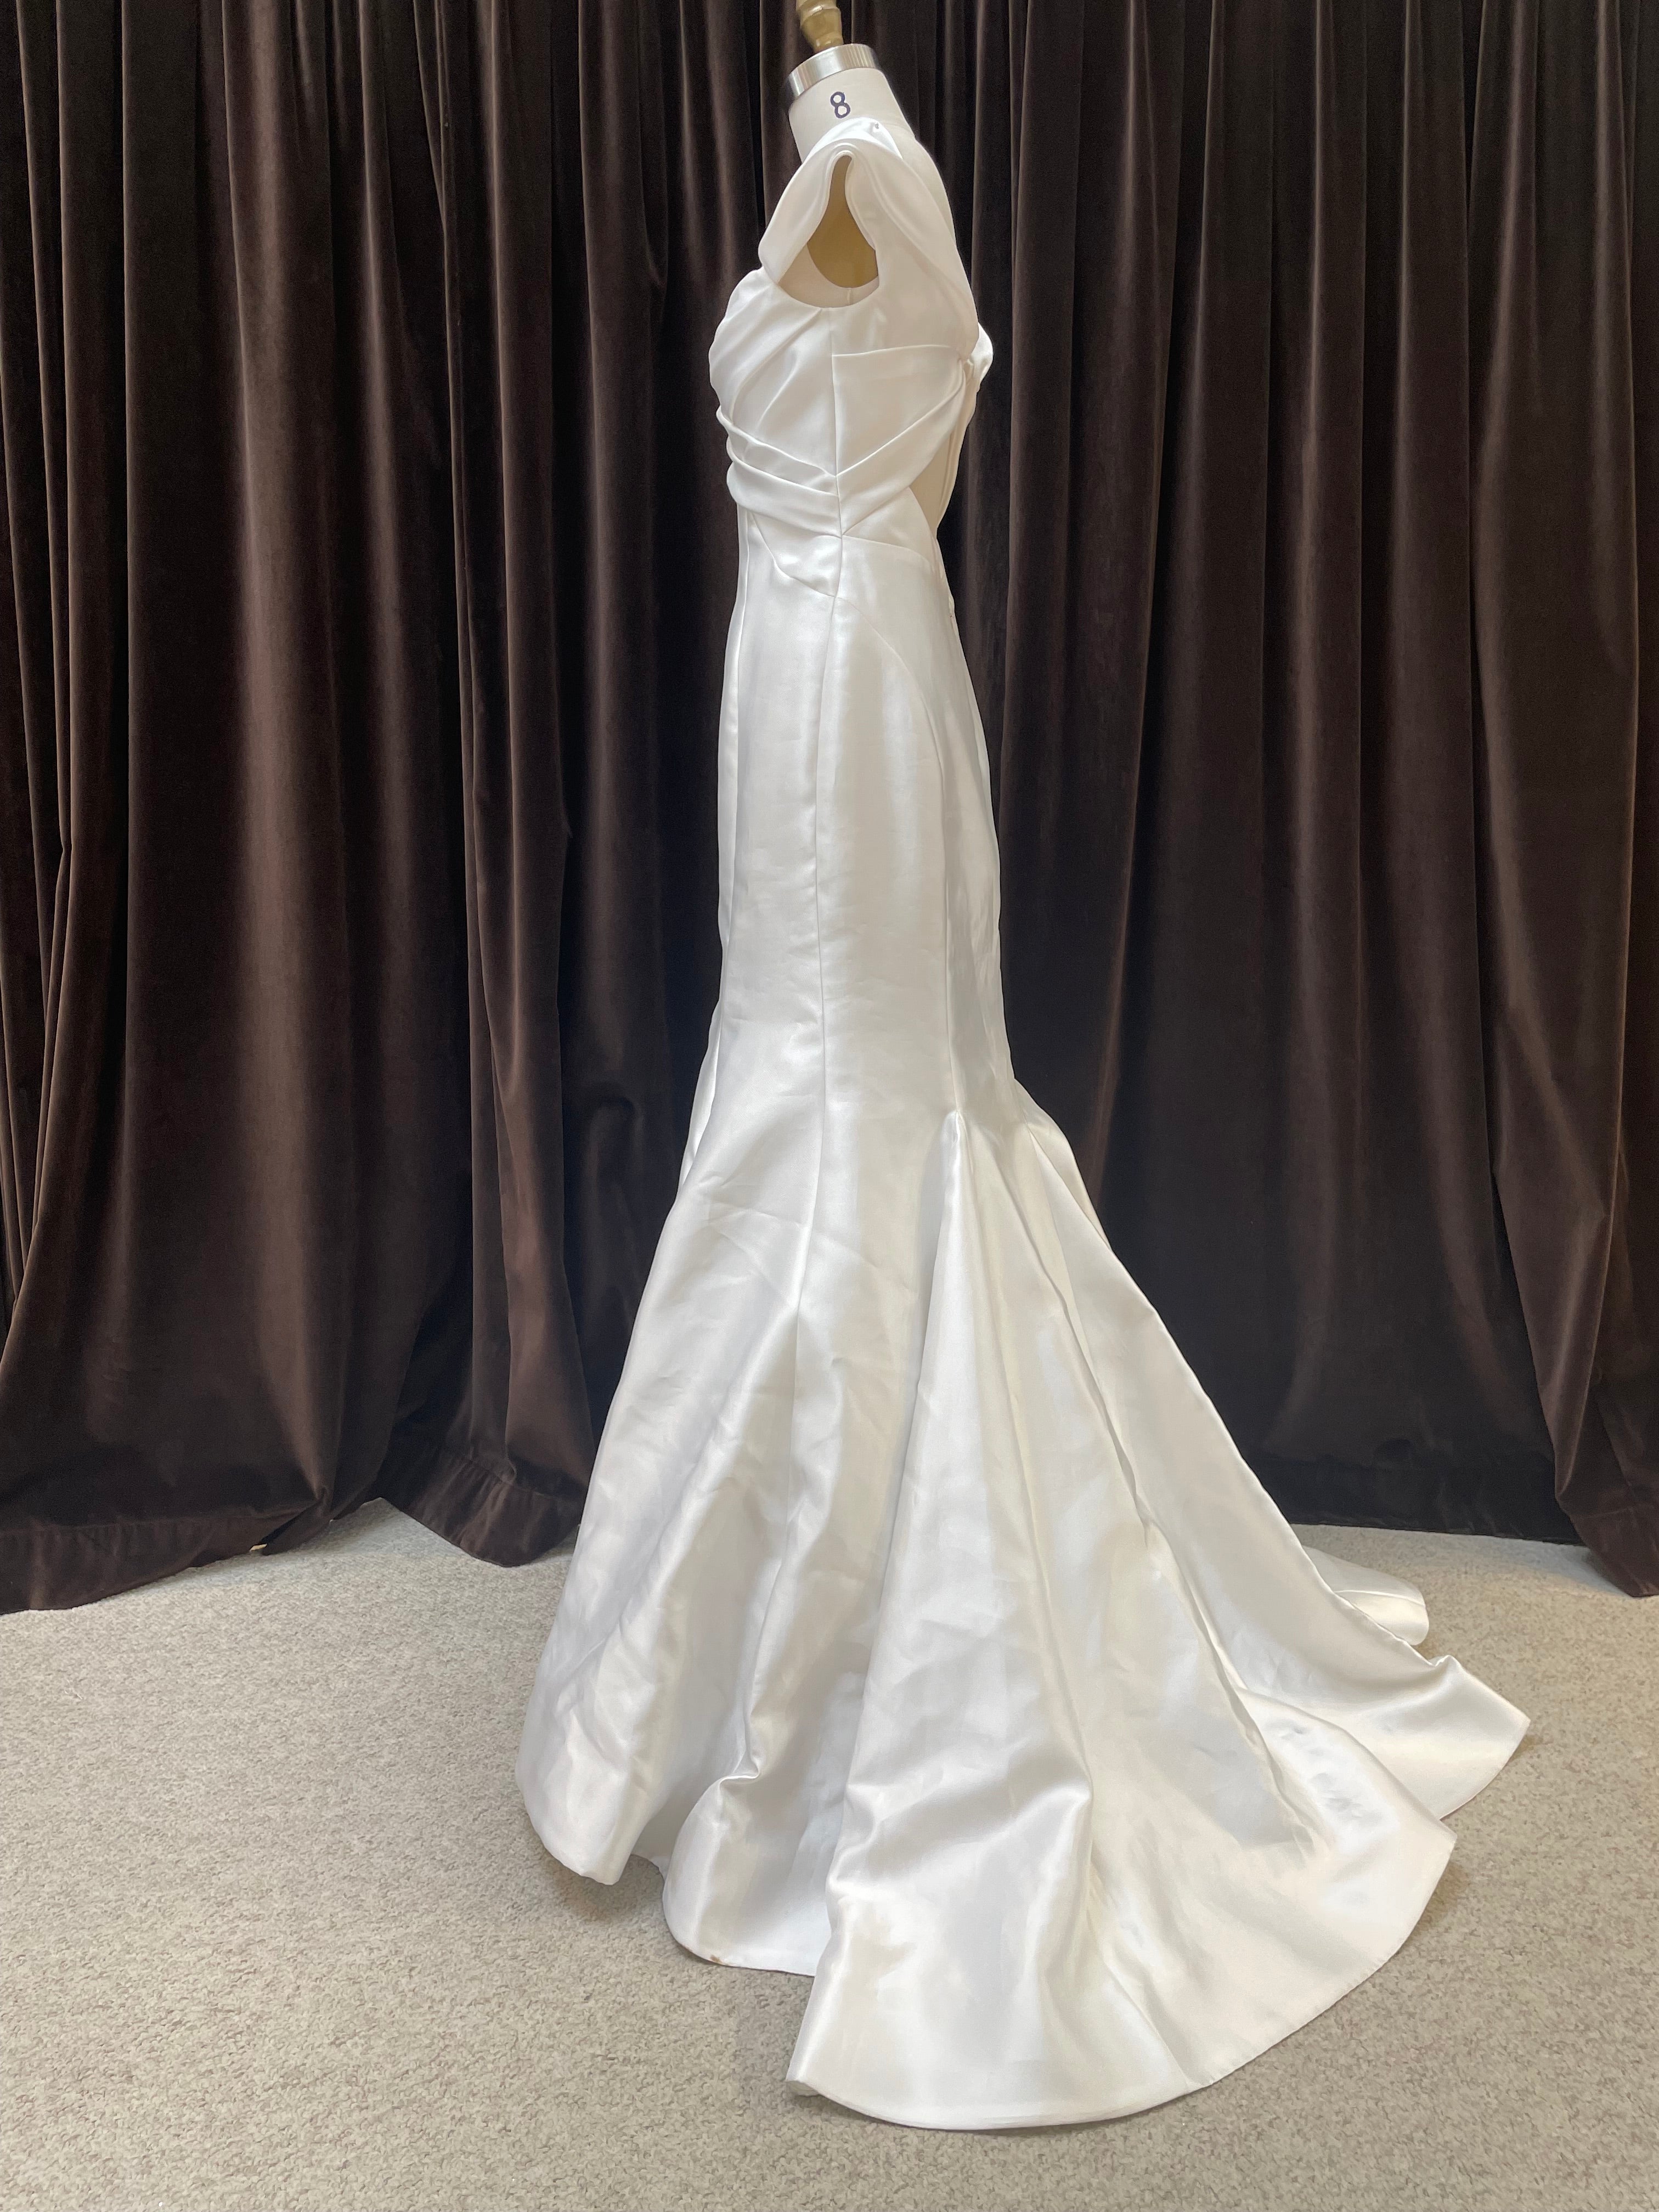 GC#35313 - Allison Webb Carter Wedding Dress in Size 10